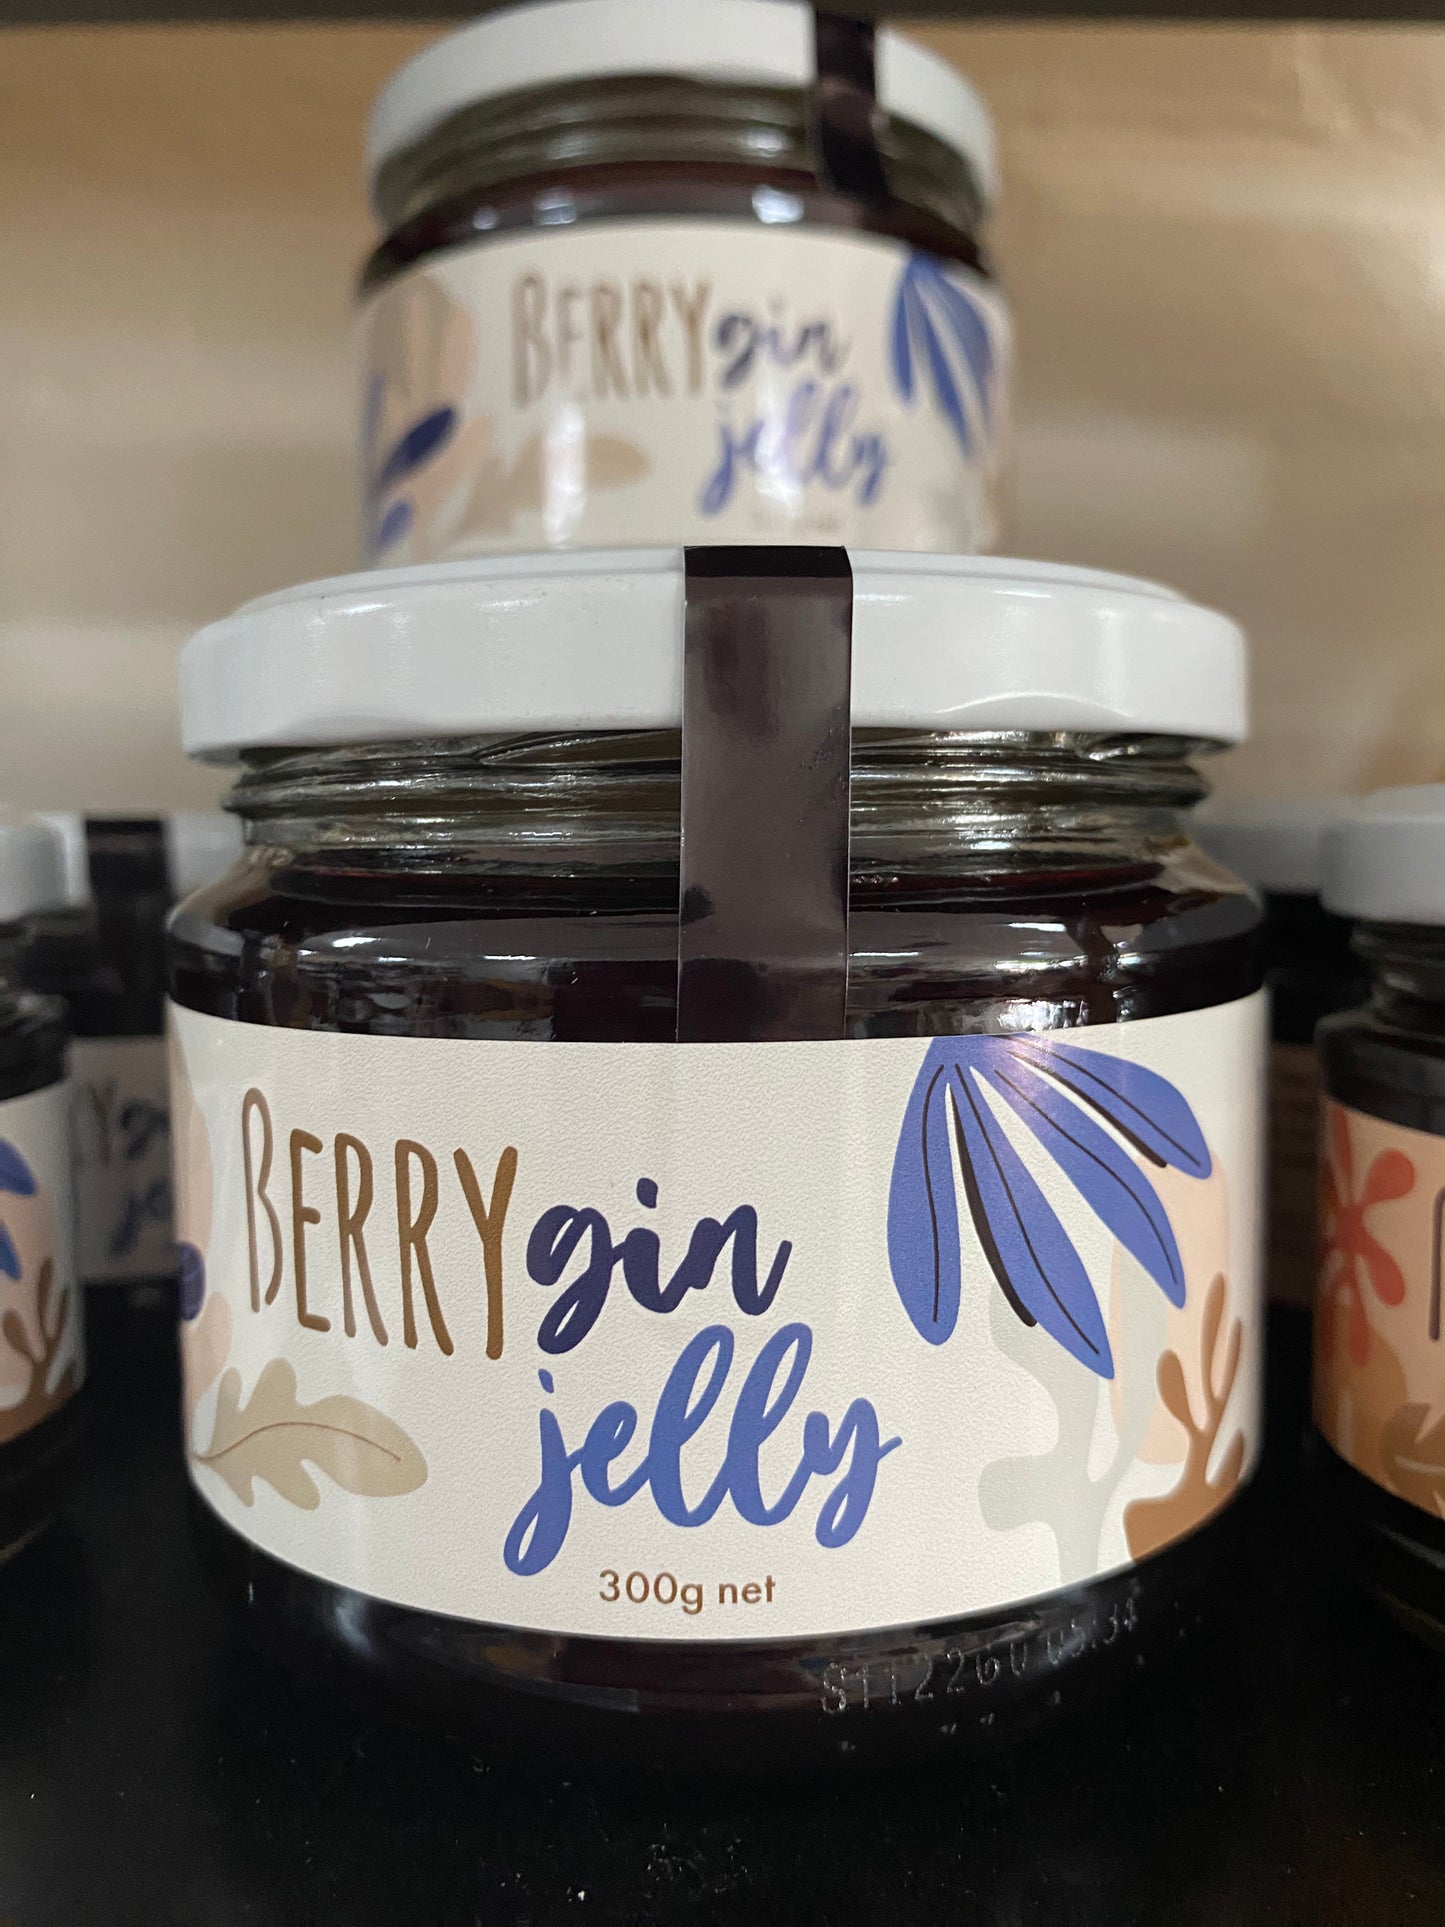 Berry Gin Jelly by Glen Gowrie Distillery